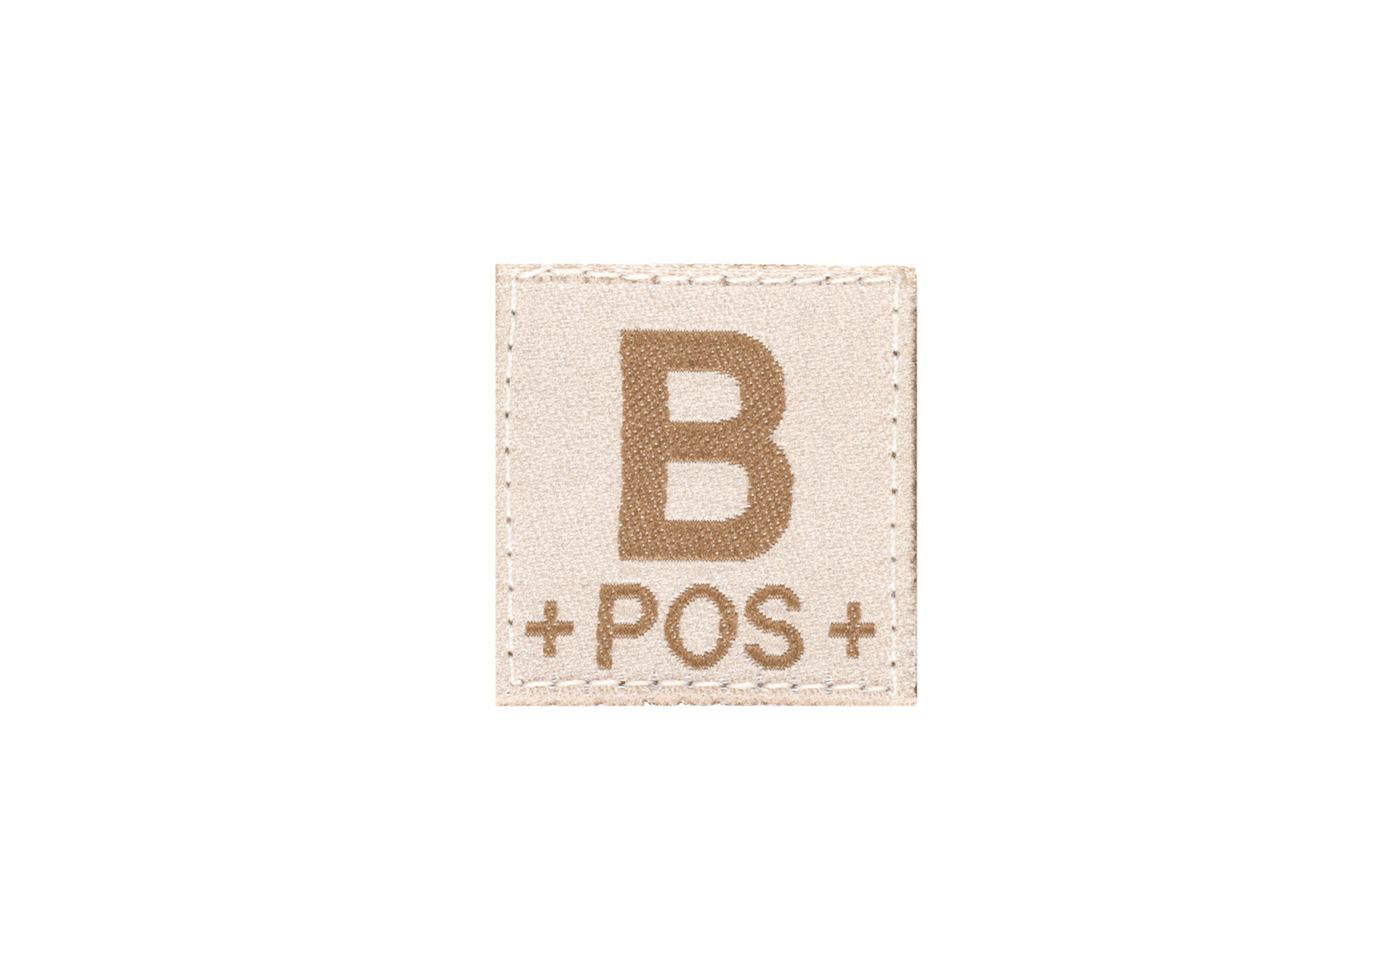 B Pos Bloodgroup Patch Desert